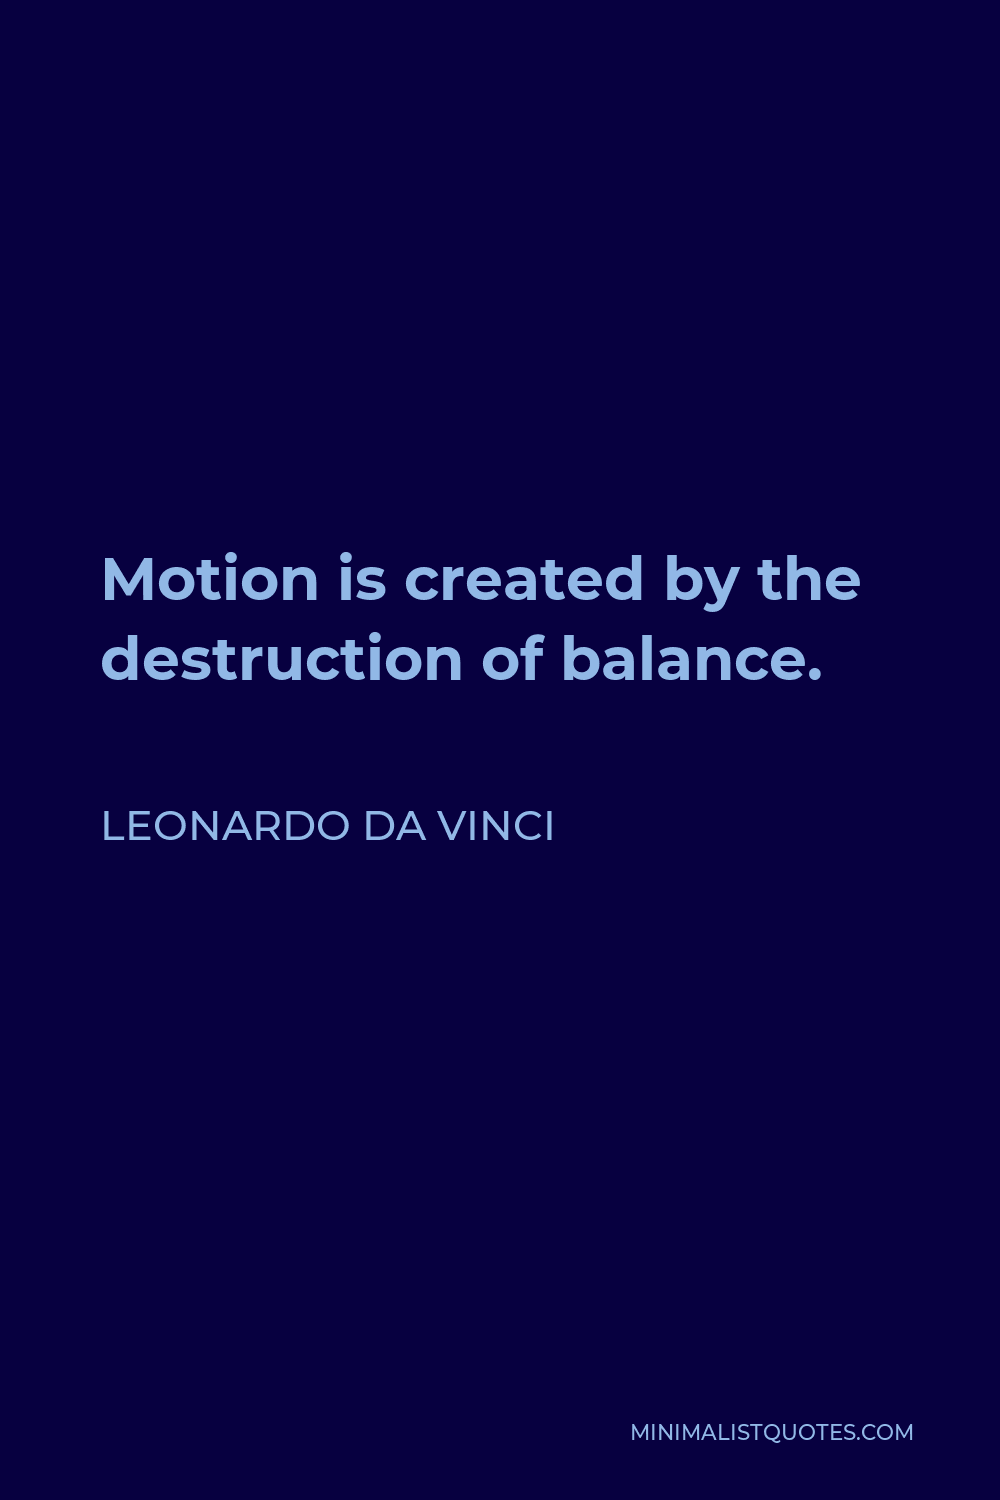 Leonardo da Vinci Quote - Motion is created by the destruction of balance.